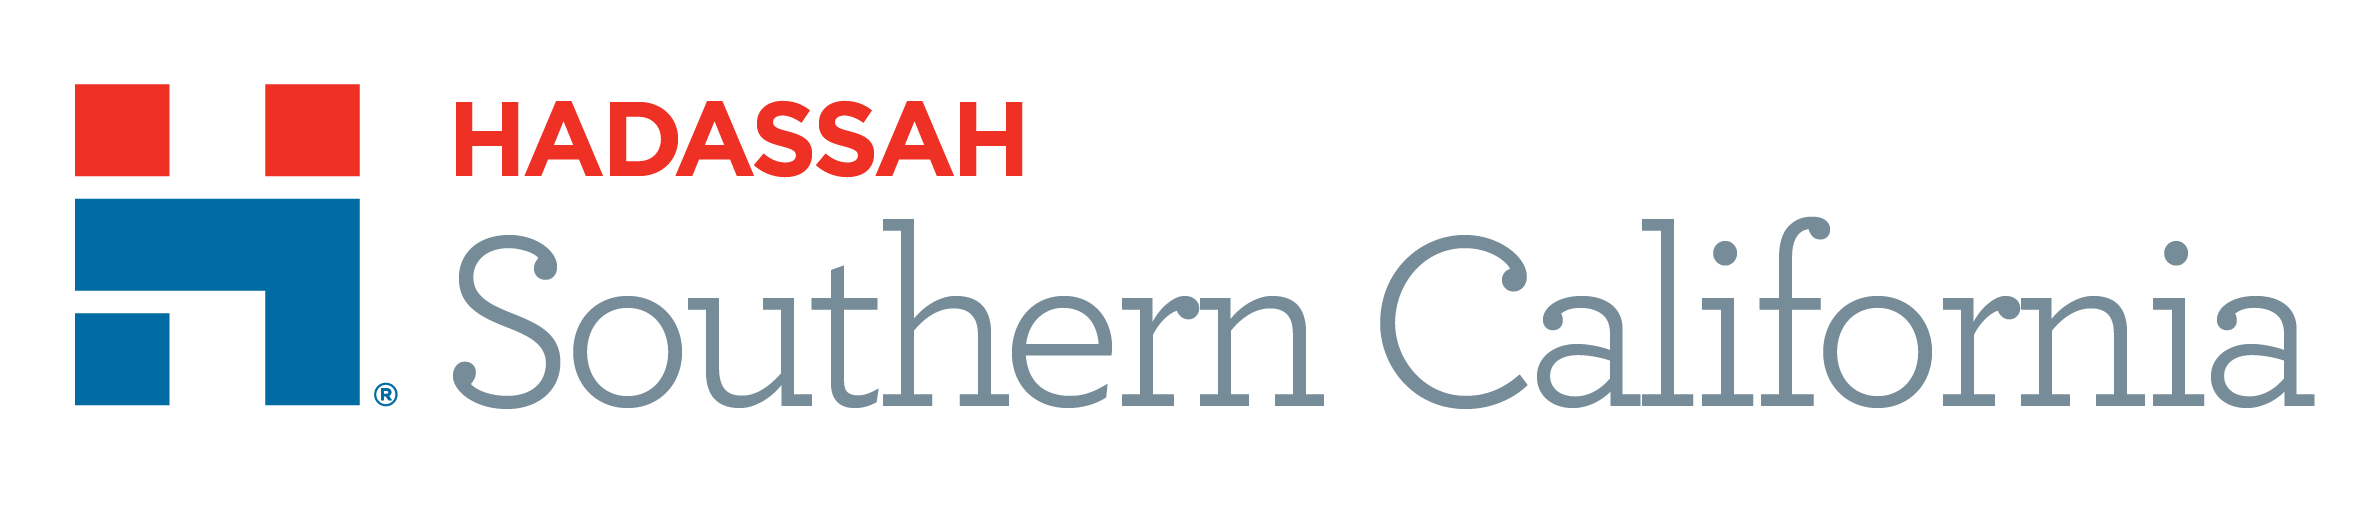 southern-california-logo.png